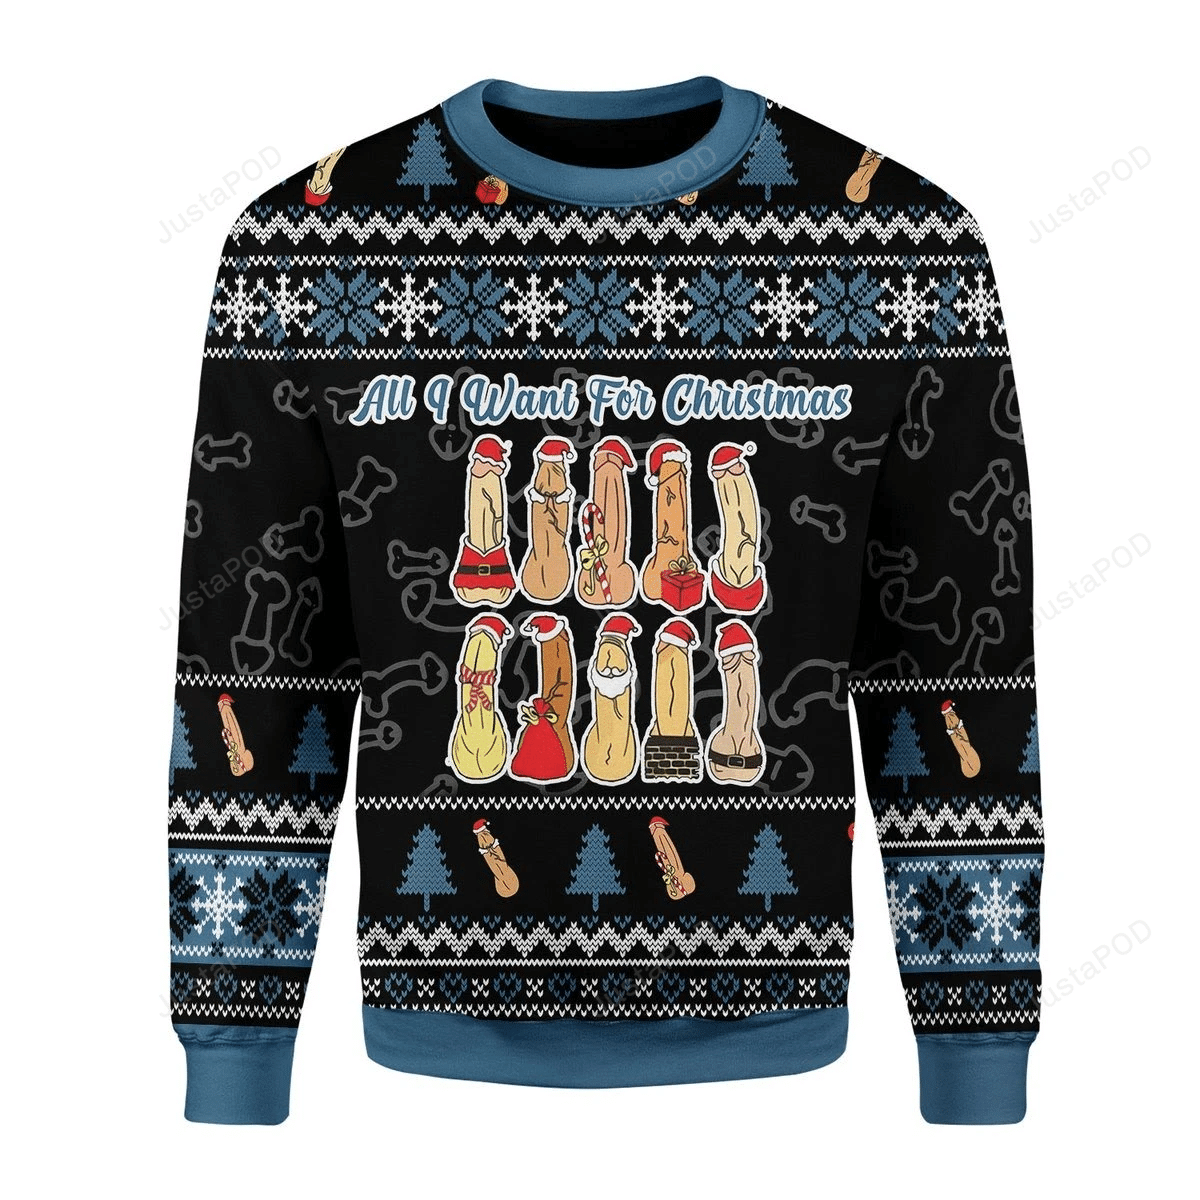 Buy Naughty Ugly Christmas Sweater All Over Print Sweatshirt Ugly Sweater Homefavo